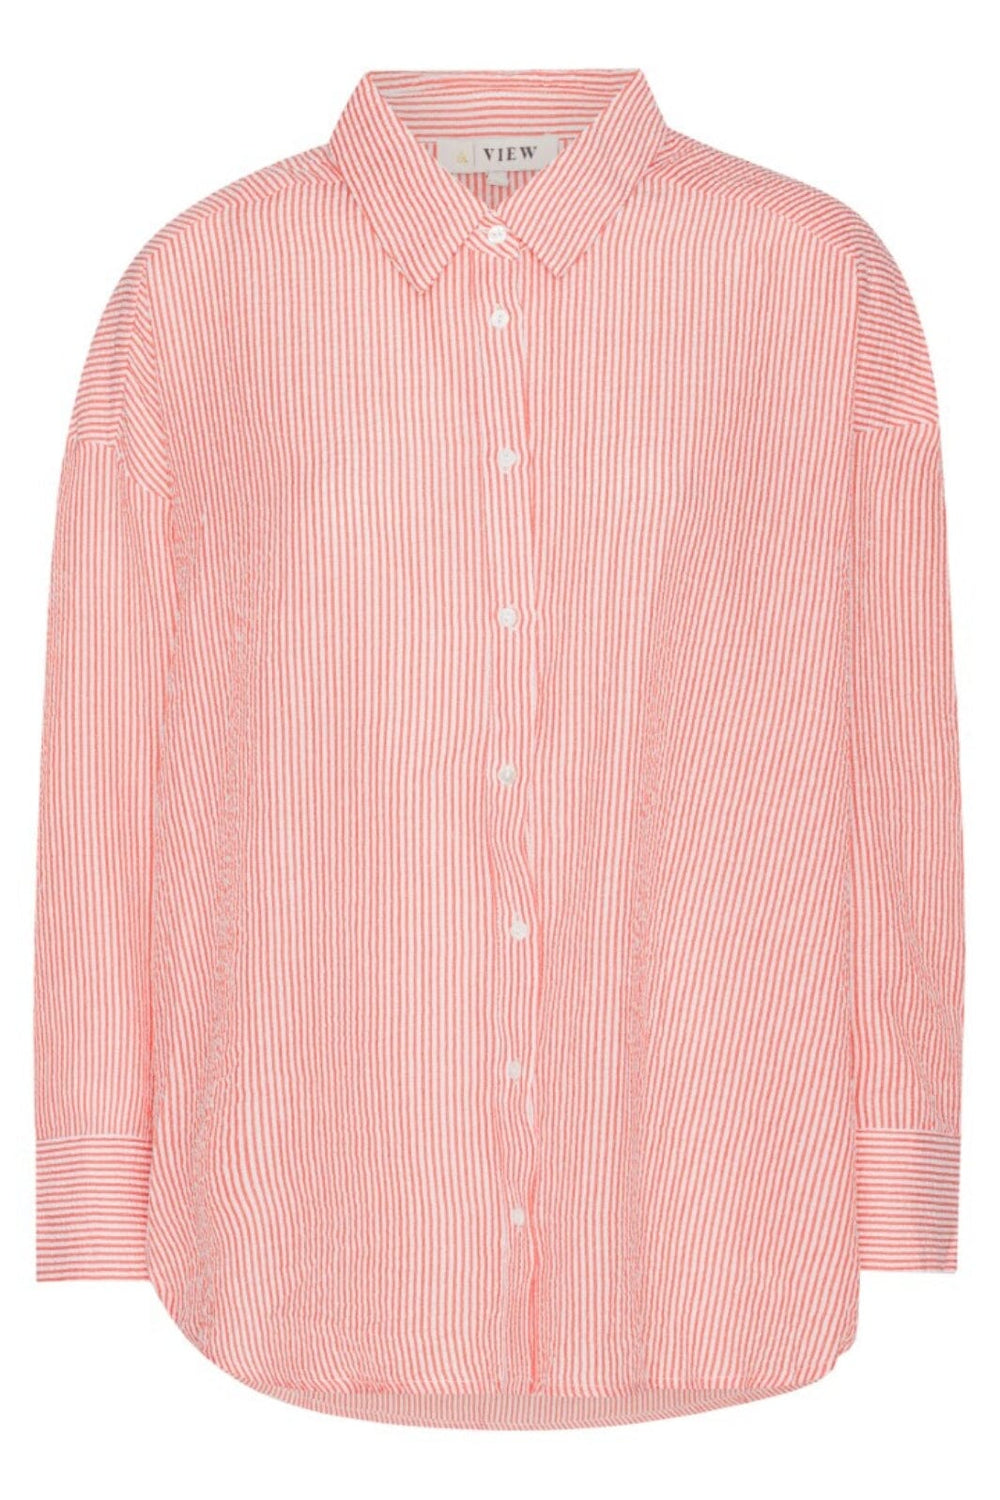 Forudbestilling - A-VIEW - Sonja Shirt - 090 Red/White (Maj/Juni) Skjorter 